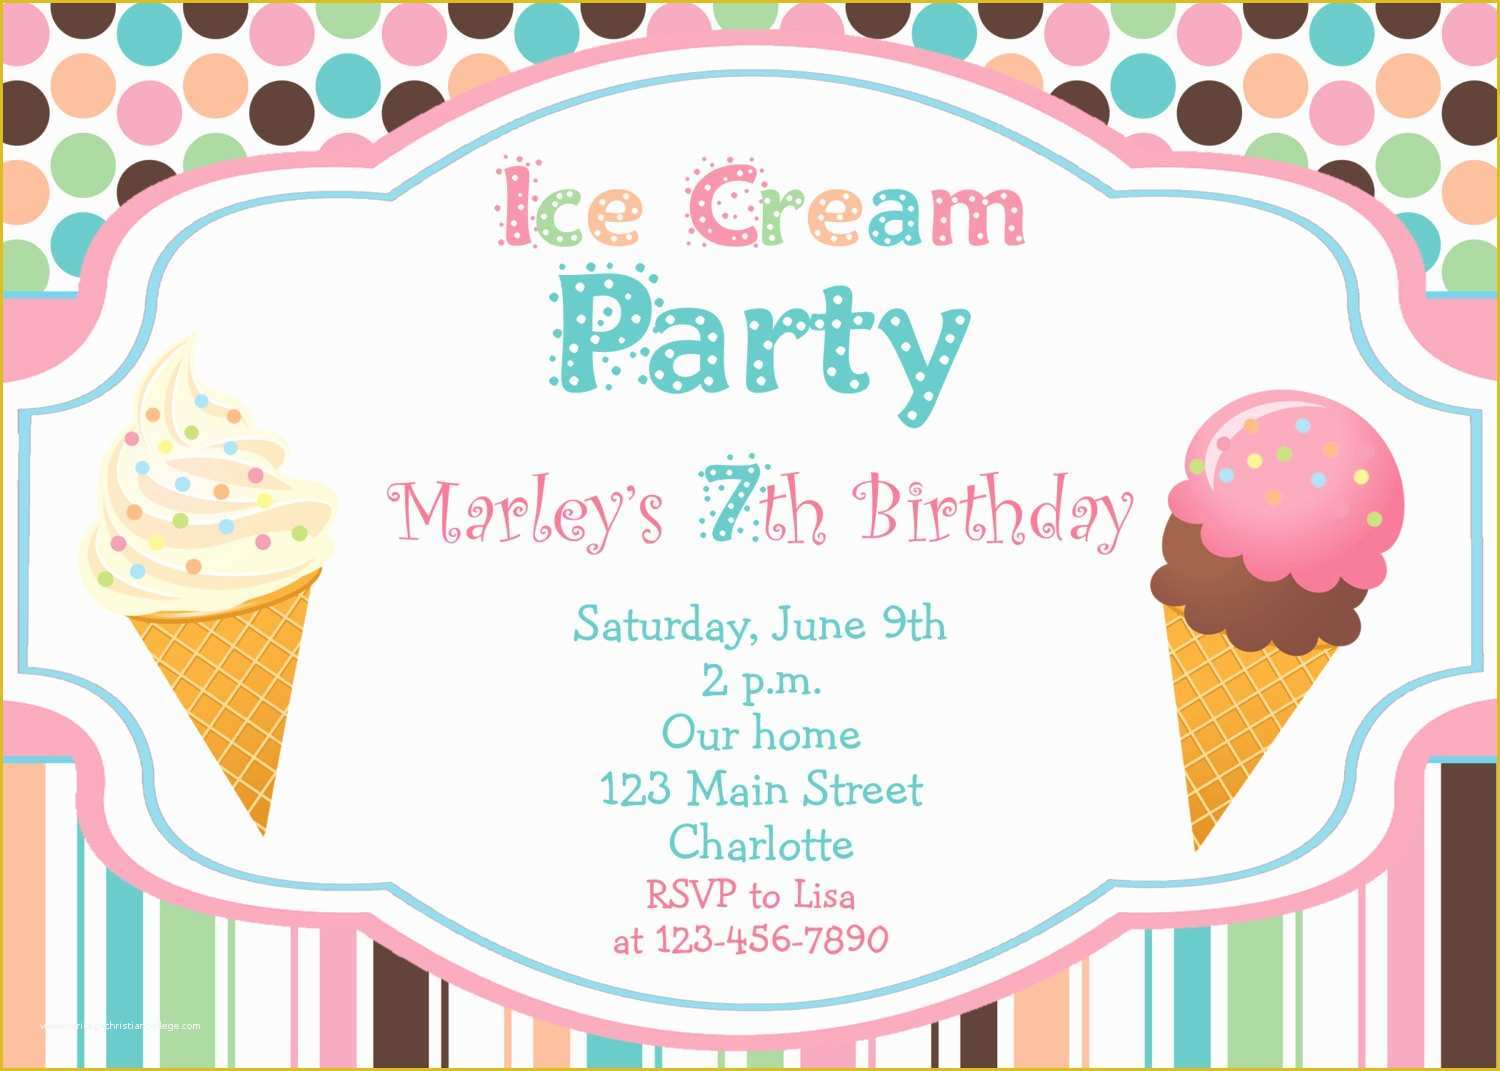 Ice Cream social Invitation Template Free Of Wonderful Ice Cream Birthday Invitations Desig Great Ice